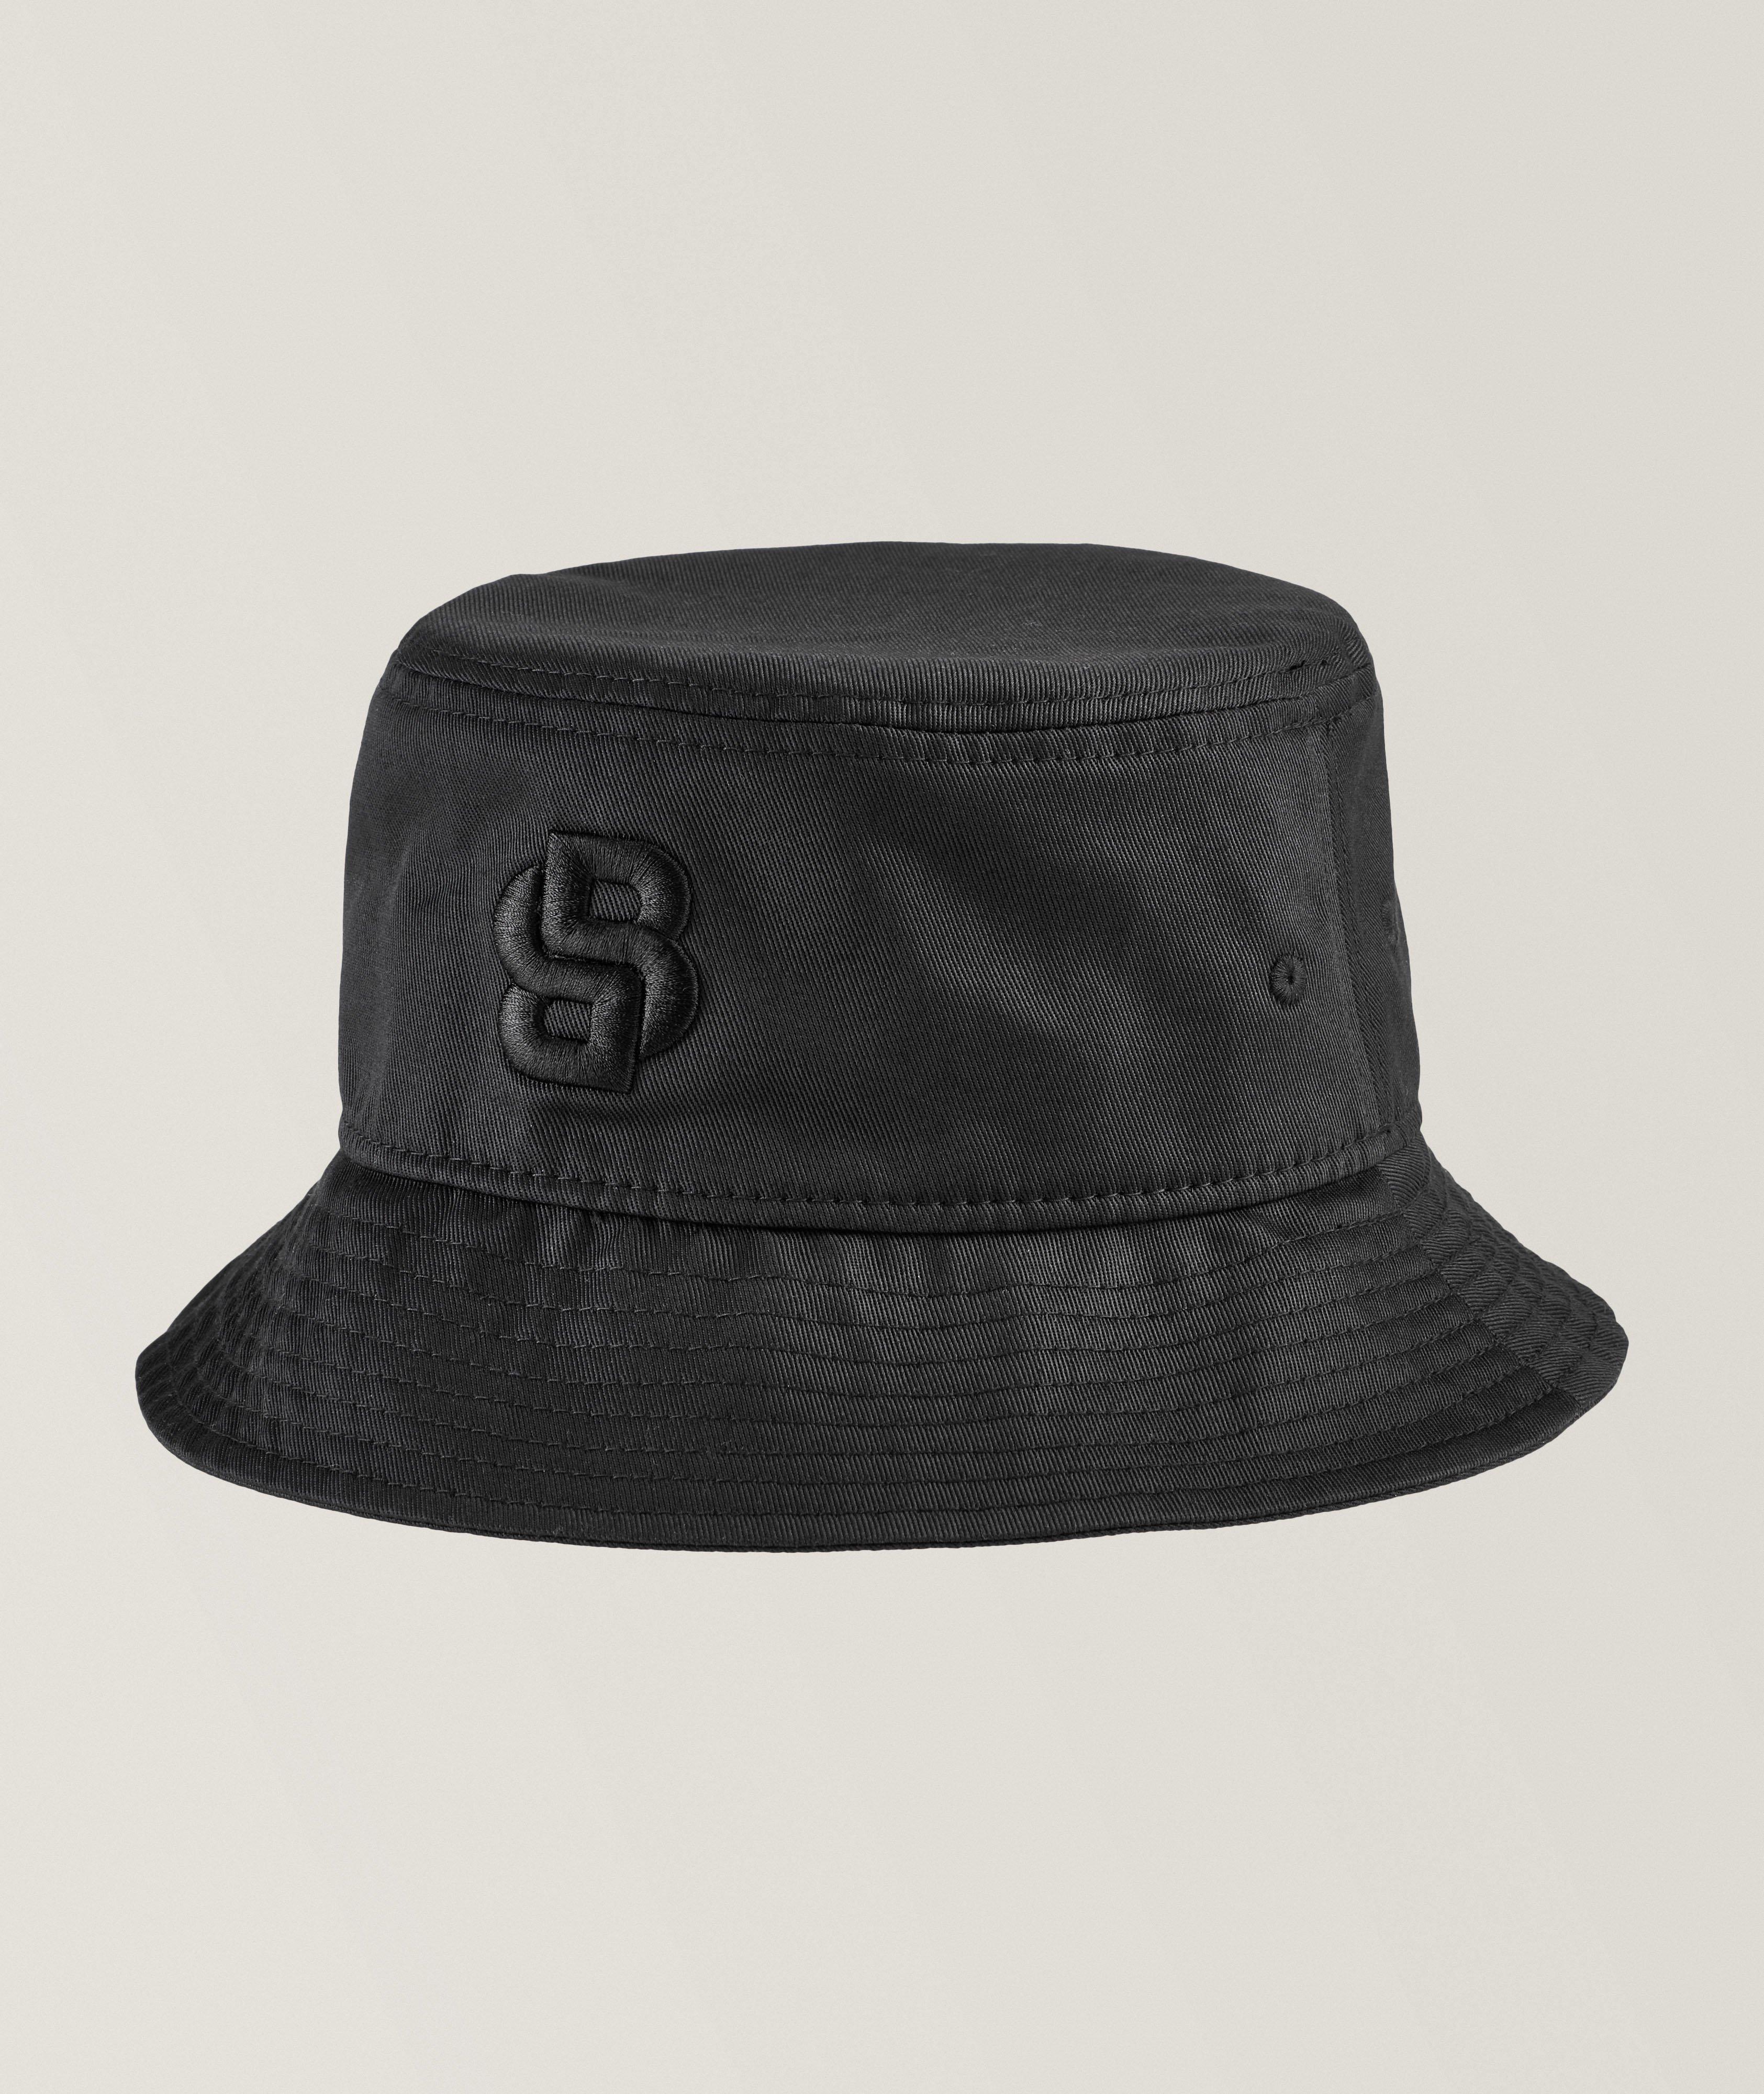 Saul B Iconic Cotton Bucket Hat image 0